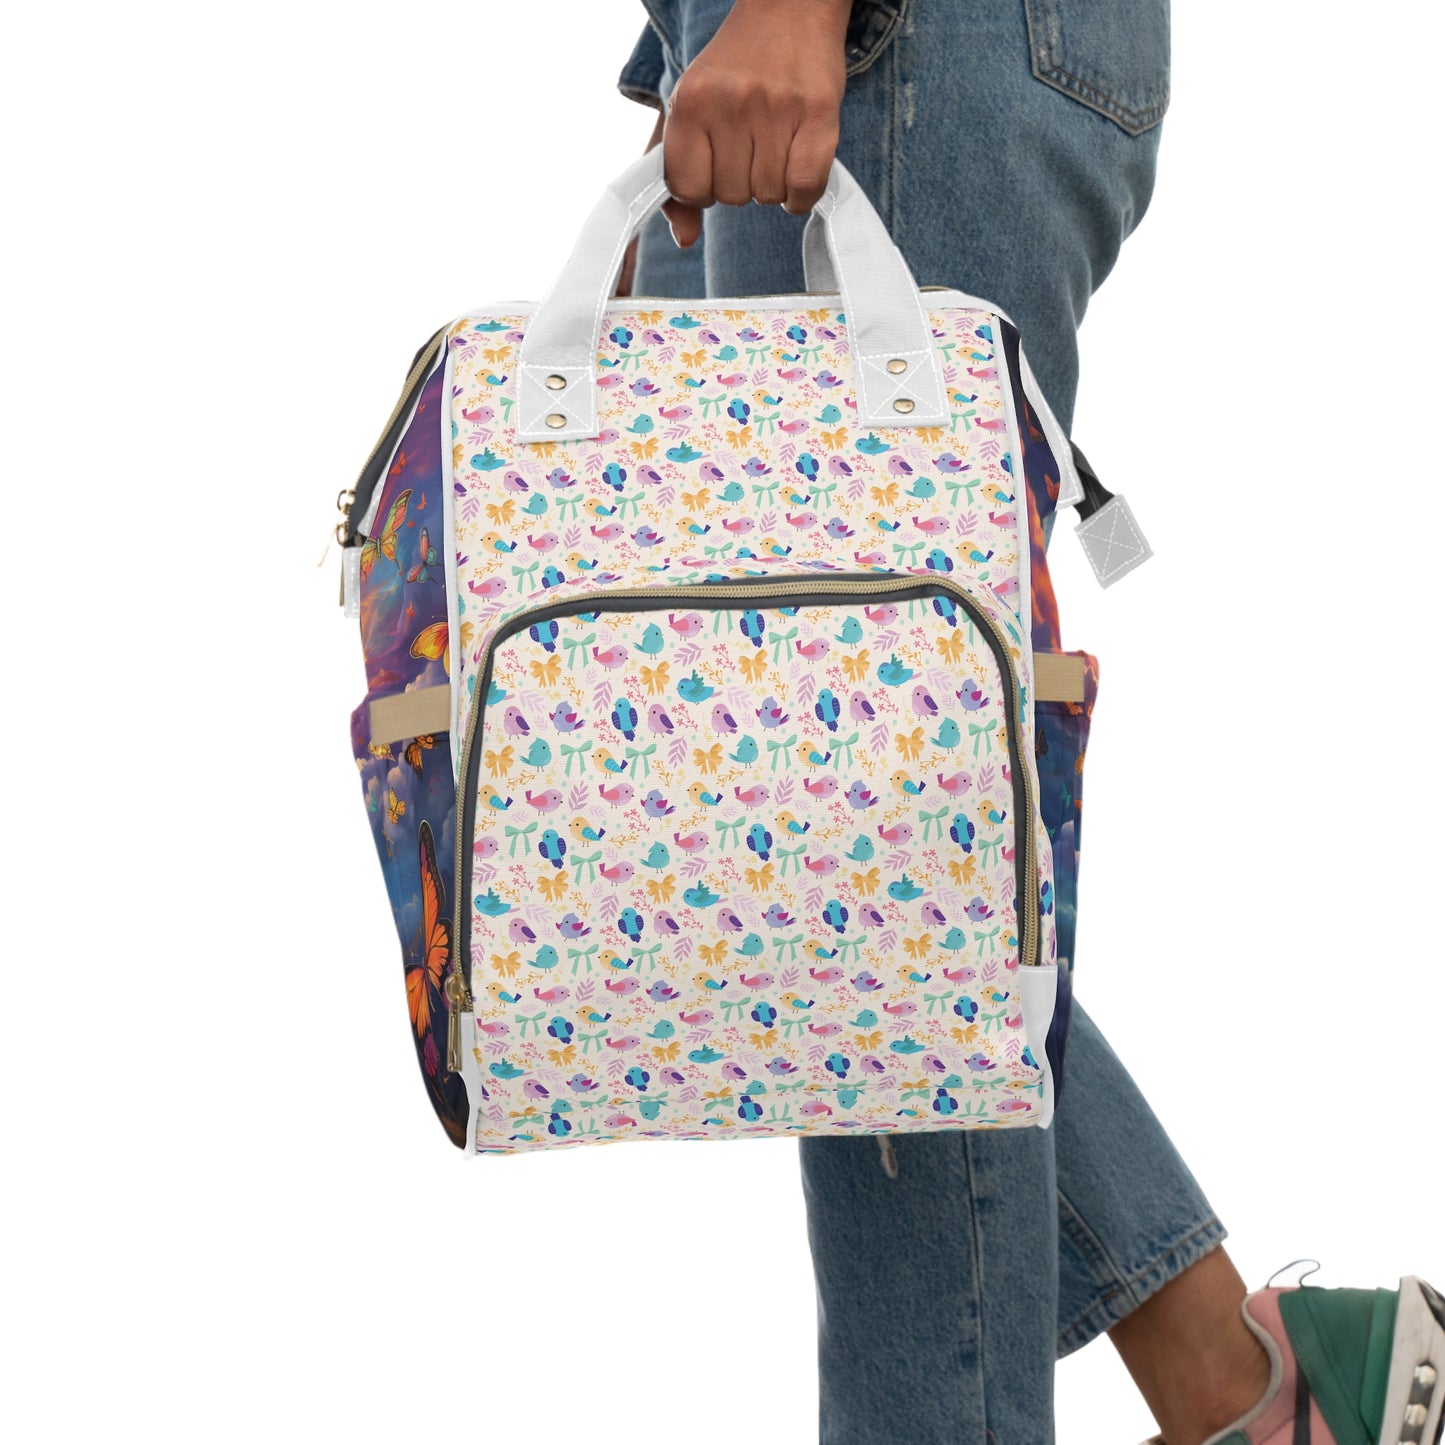 Durable Diaper Bag, Multi-compartment Diaper Bag, Butterflies Diaper Bag, Diaper Bag Backpack, Baby Diaper Bags